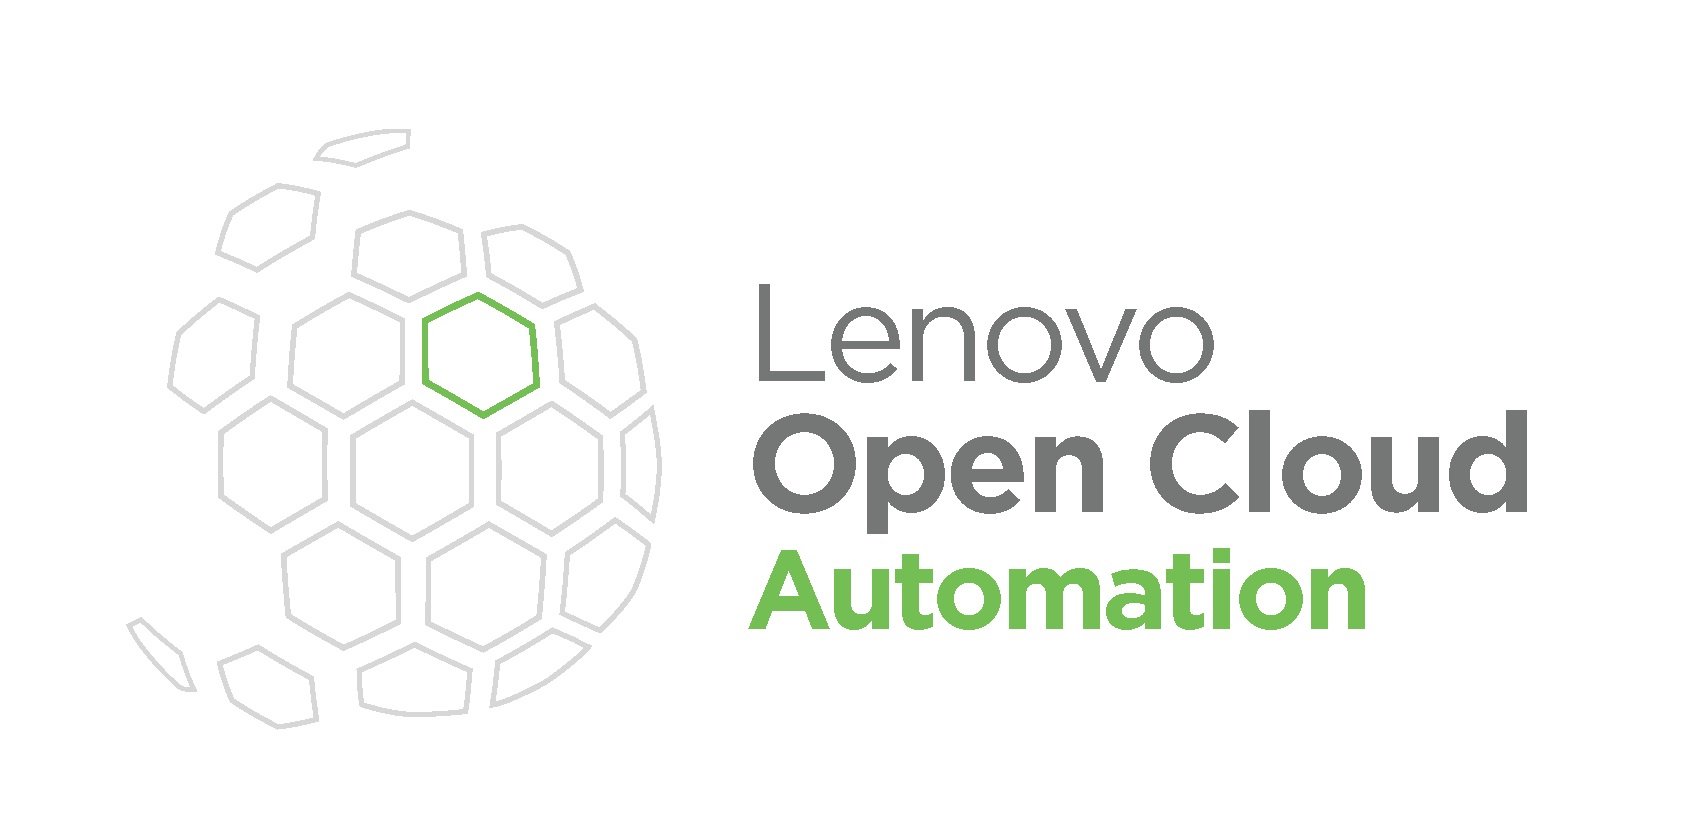 Lenovo Open Cloud Automation